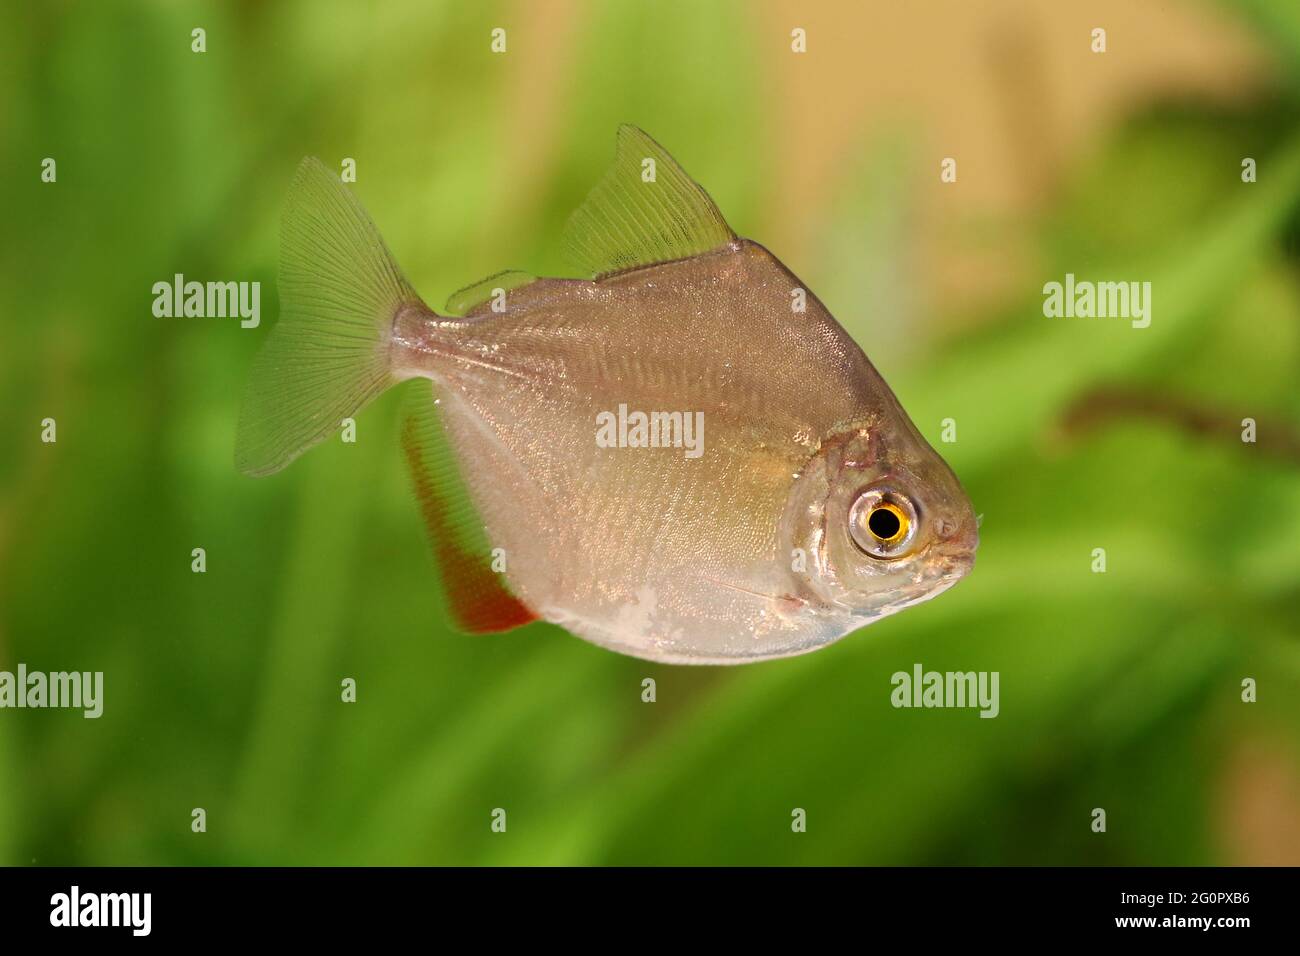 Silver dollar genus metynnis schooling aquarium fish Stock Photo